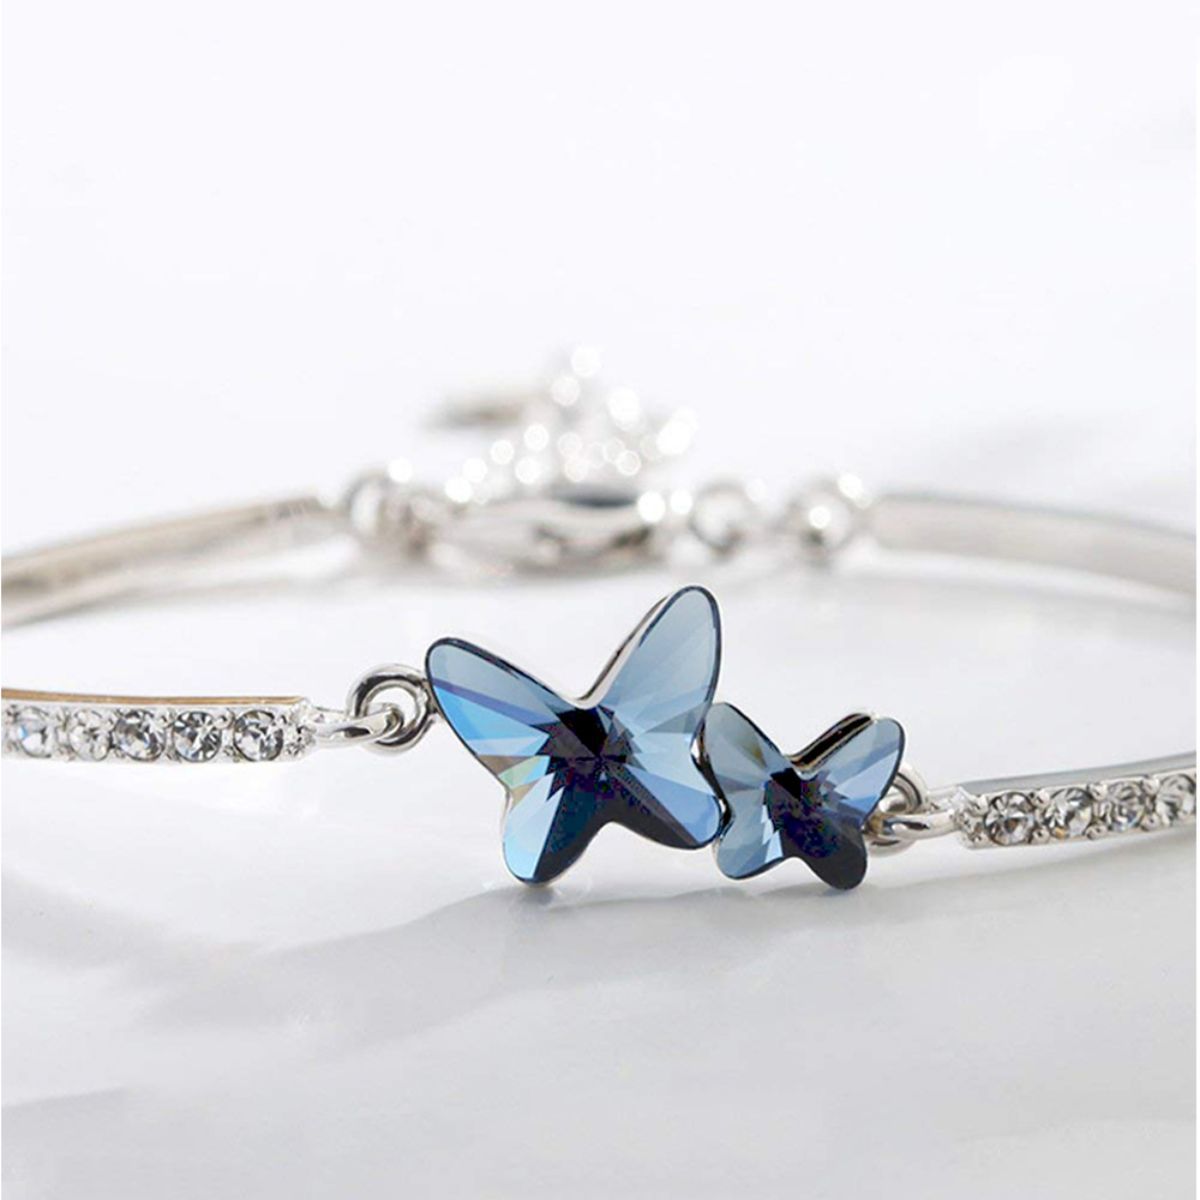 Top more than 80 blue butterfly bracelet best